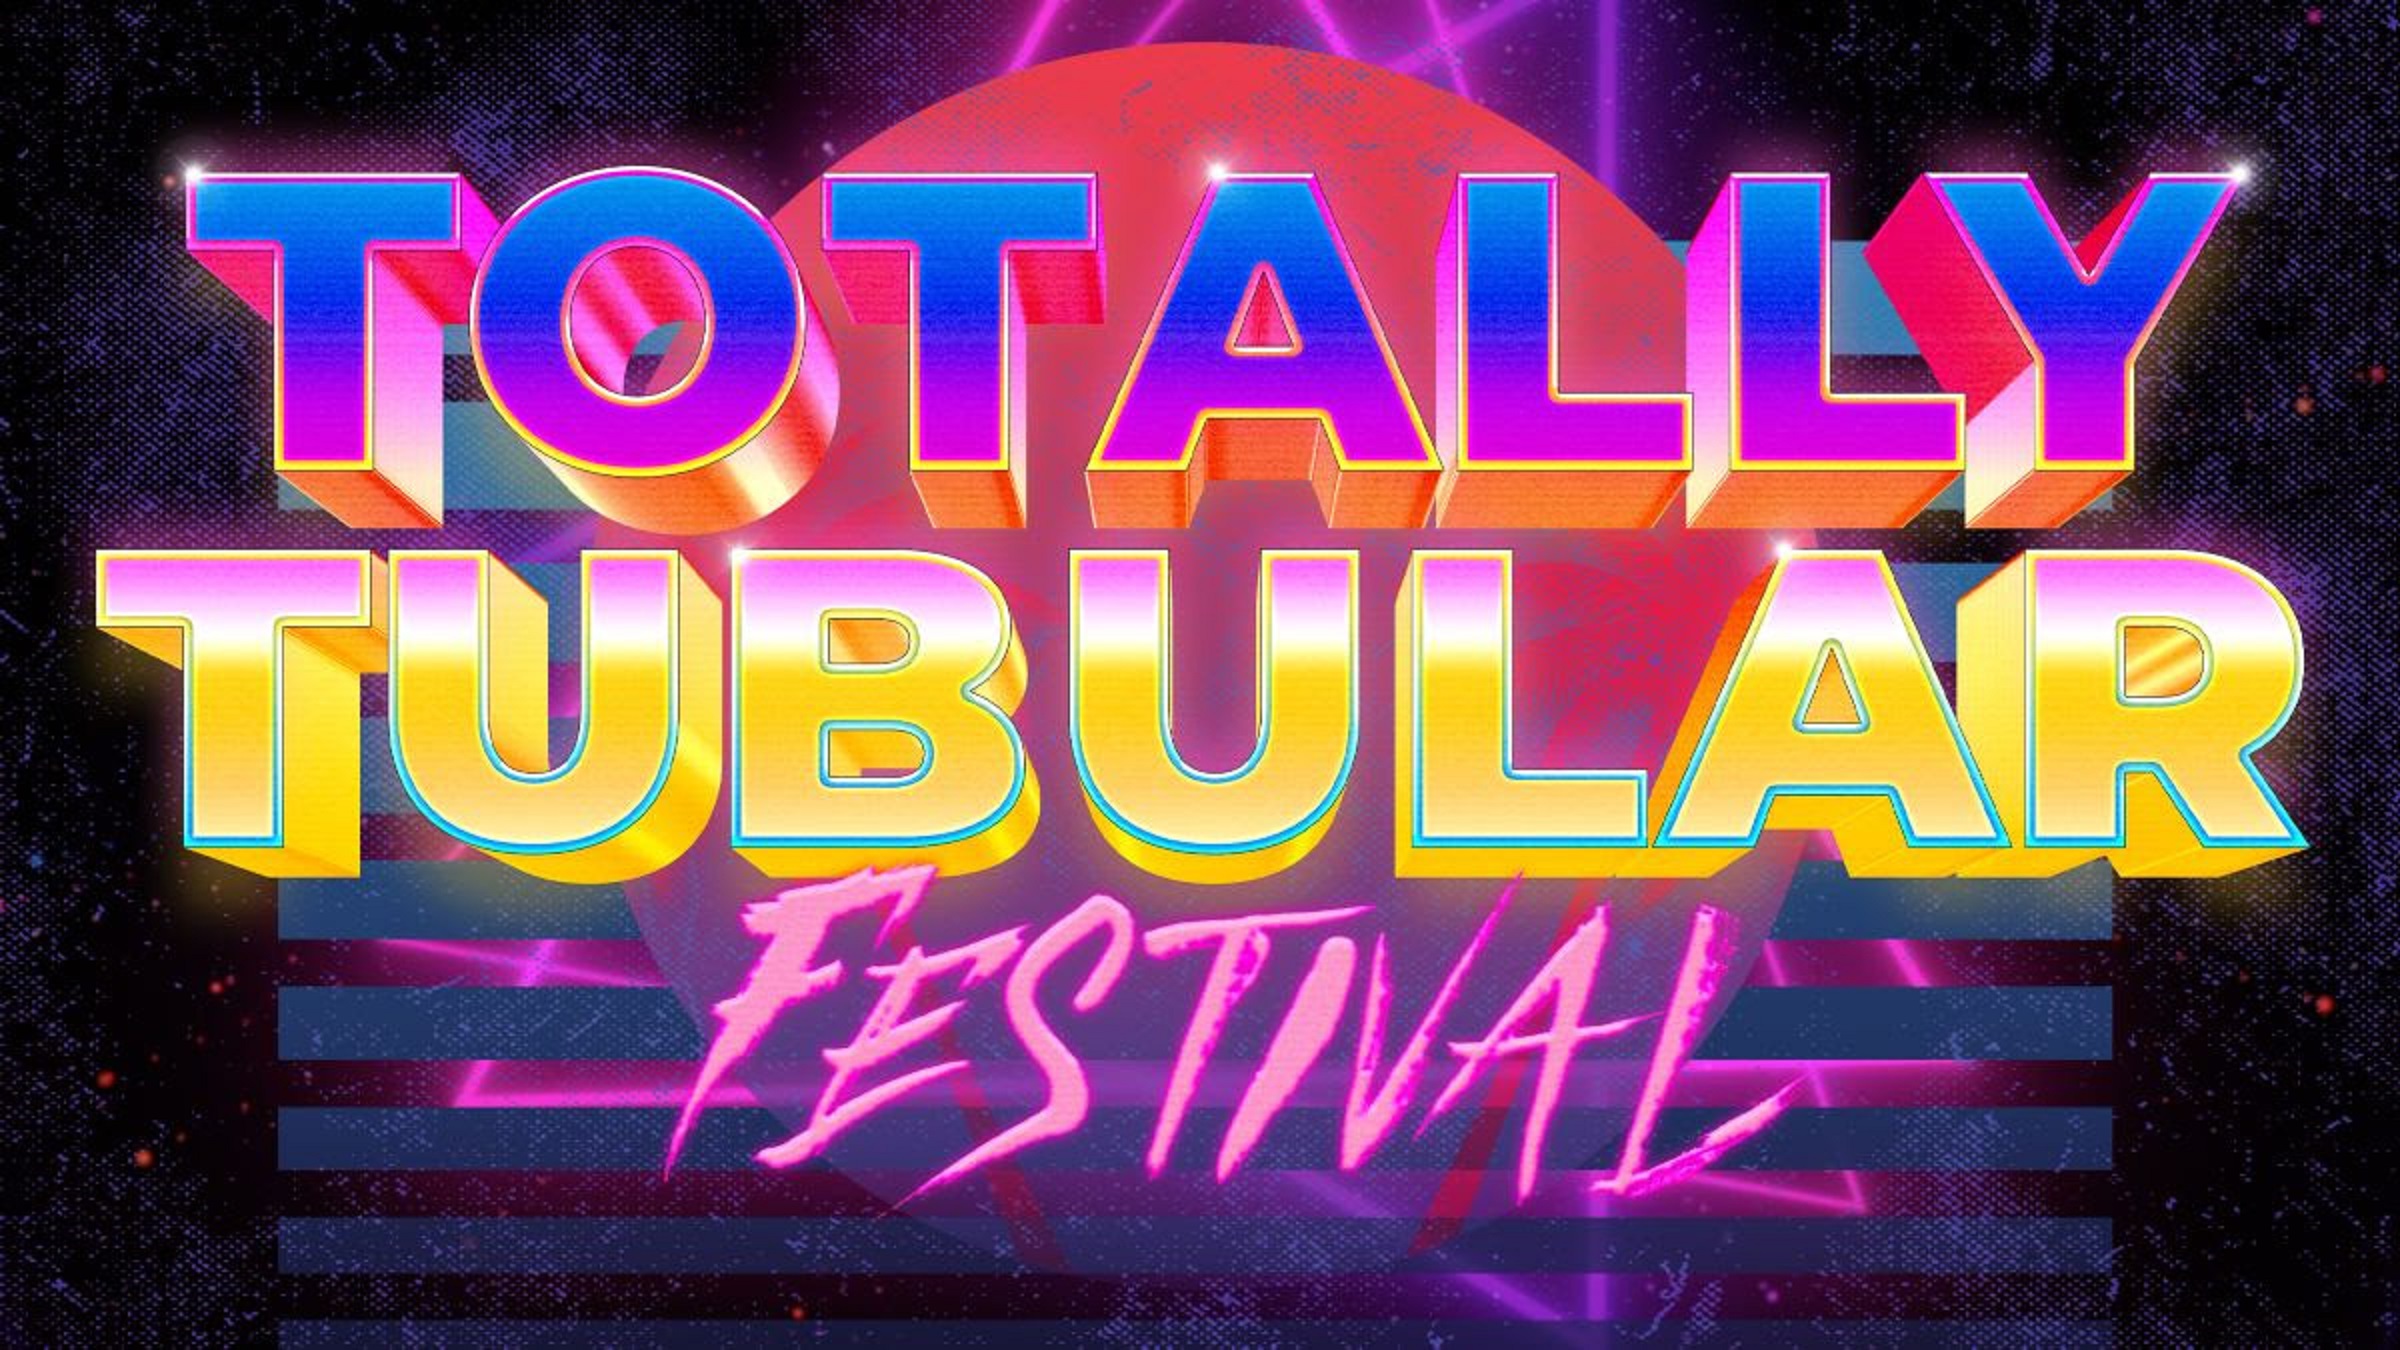 TOTALLY TUBULAR FESTIVAL Announces Lineup Change